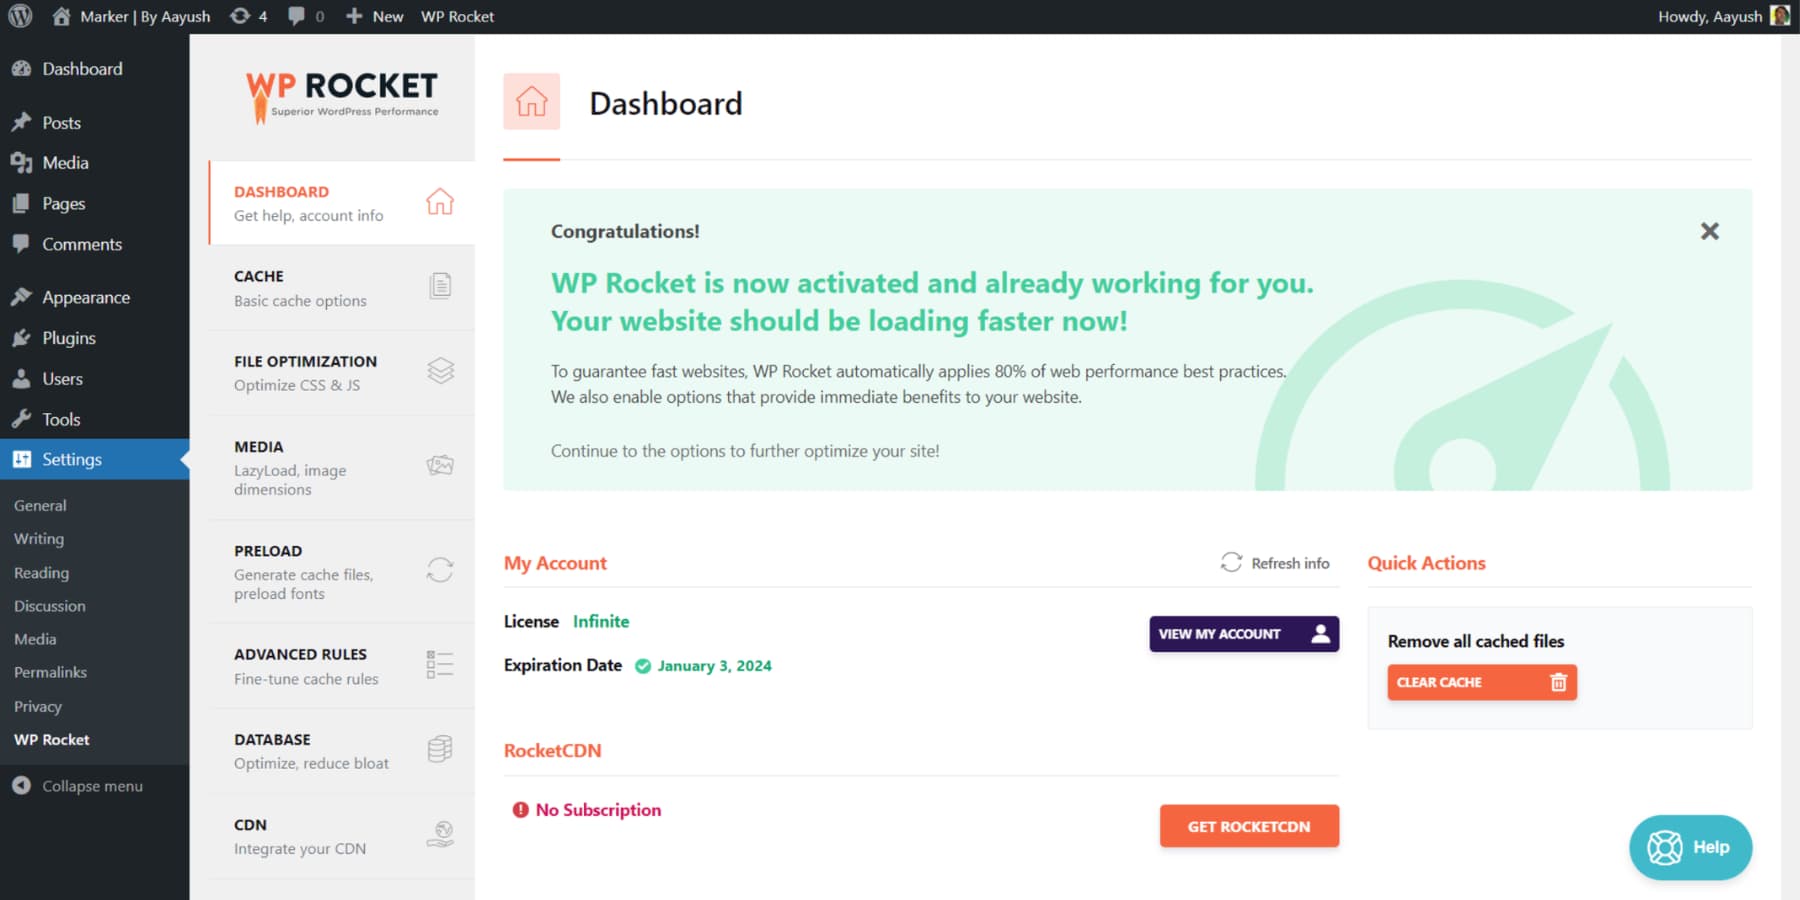 A screenshot of WP Rocket's User Interface